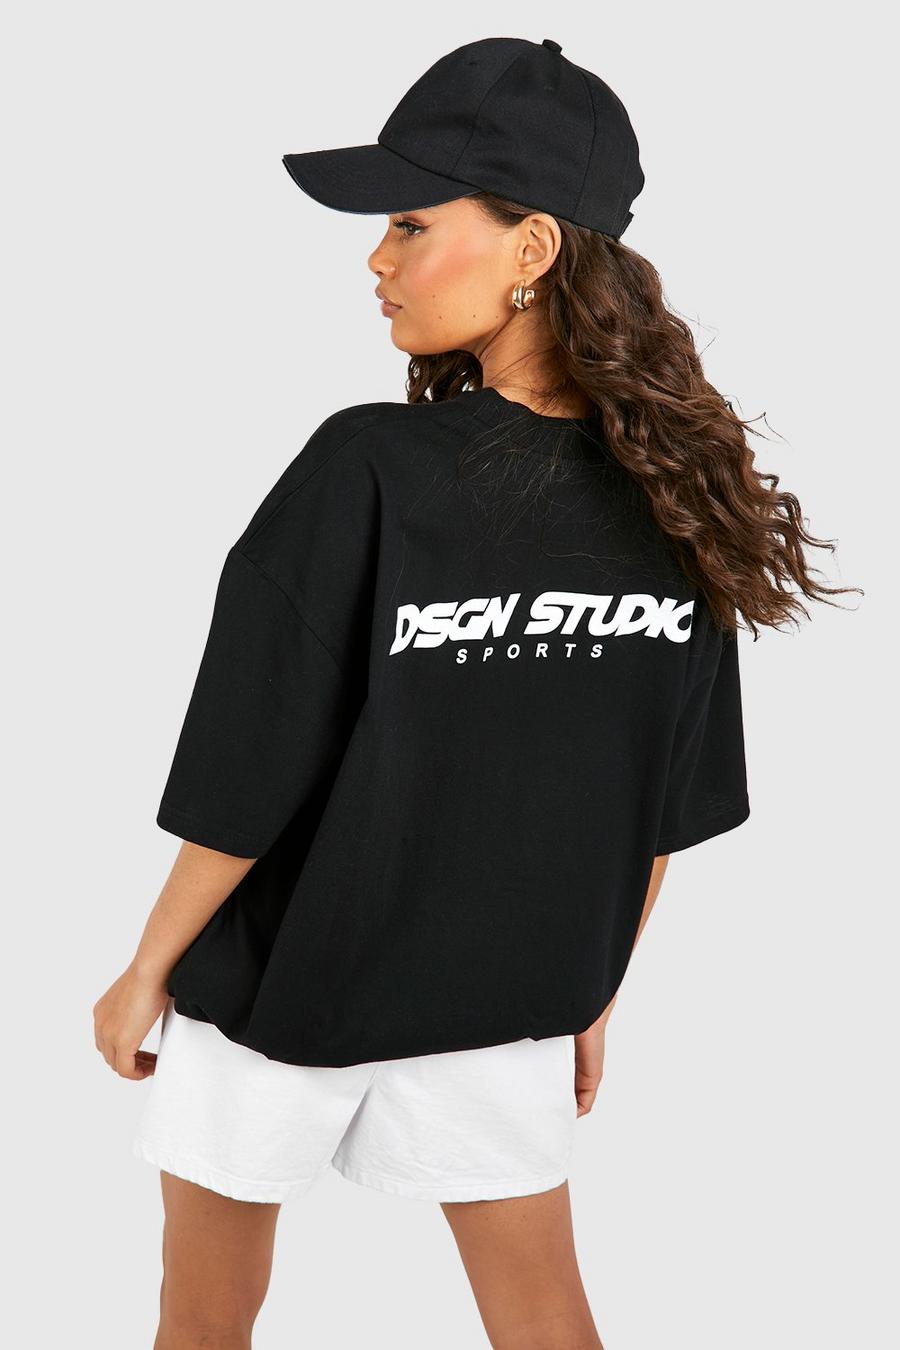 T-shirt oversize con slogan Dsgn Studio Sports, Black